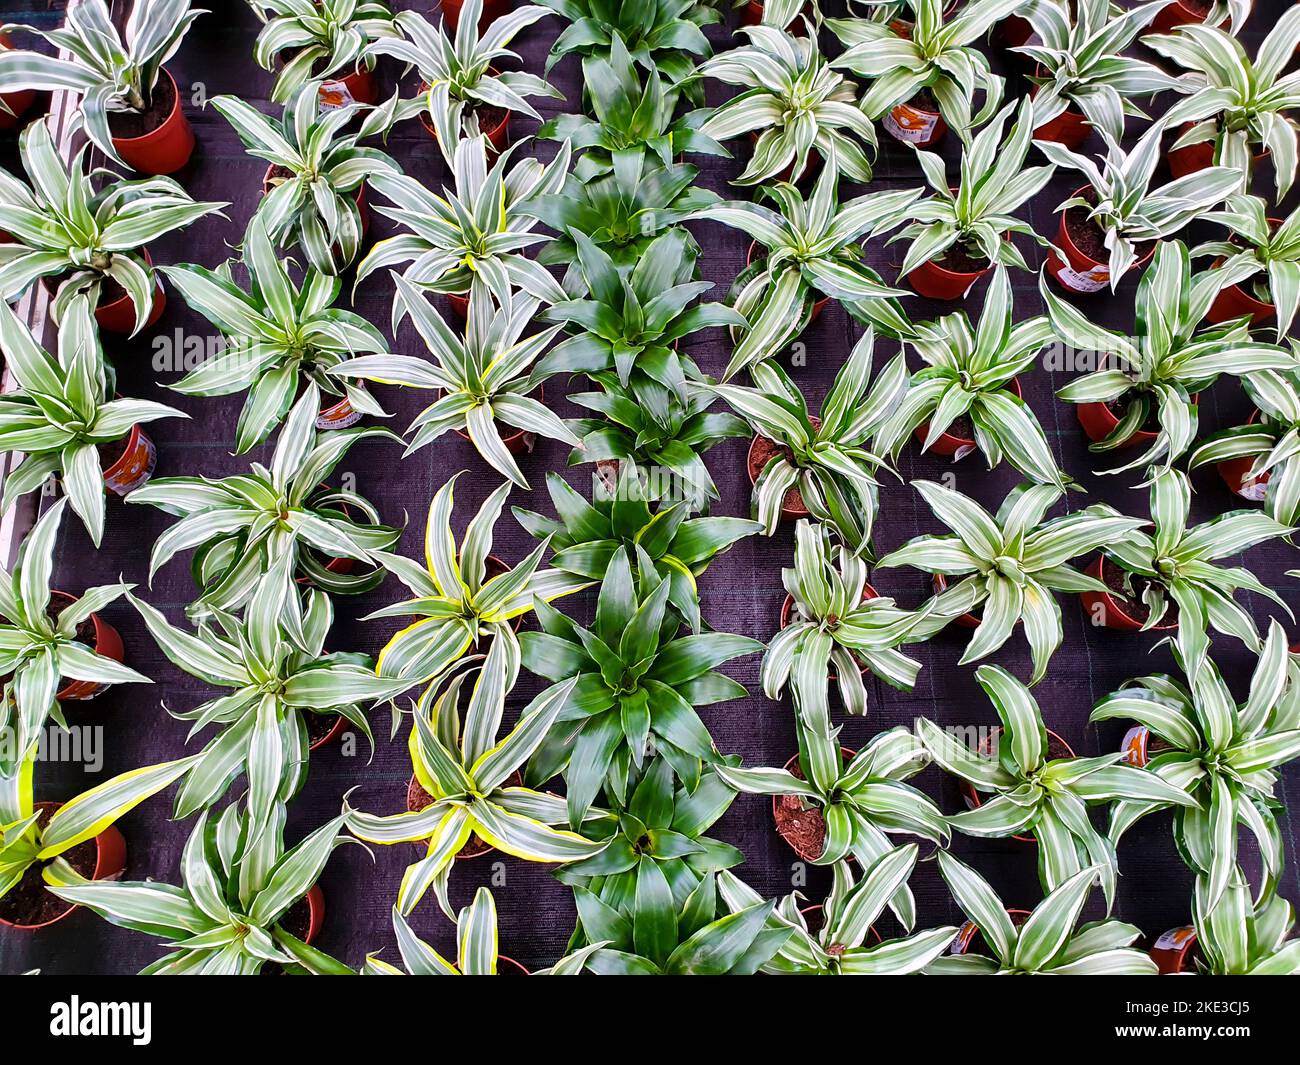 Dracaena seedlings a lot. Dracaena deremensis, Lemon Surprise, Lemon Surprise, Lemon Lime. And Dracaena angustifolia, Dracaena reflexa. Top view. Stock Photo